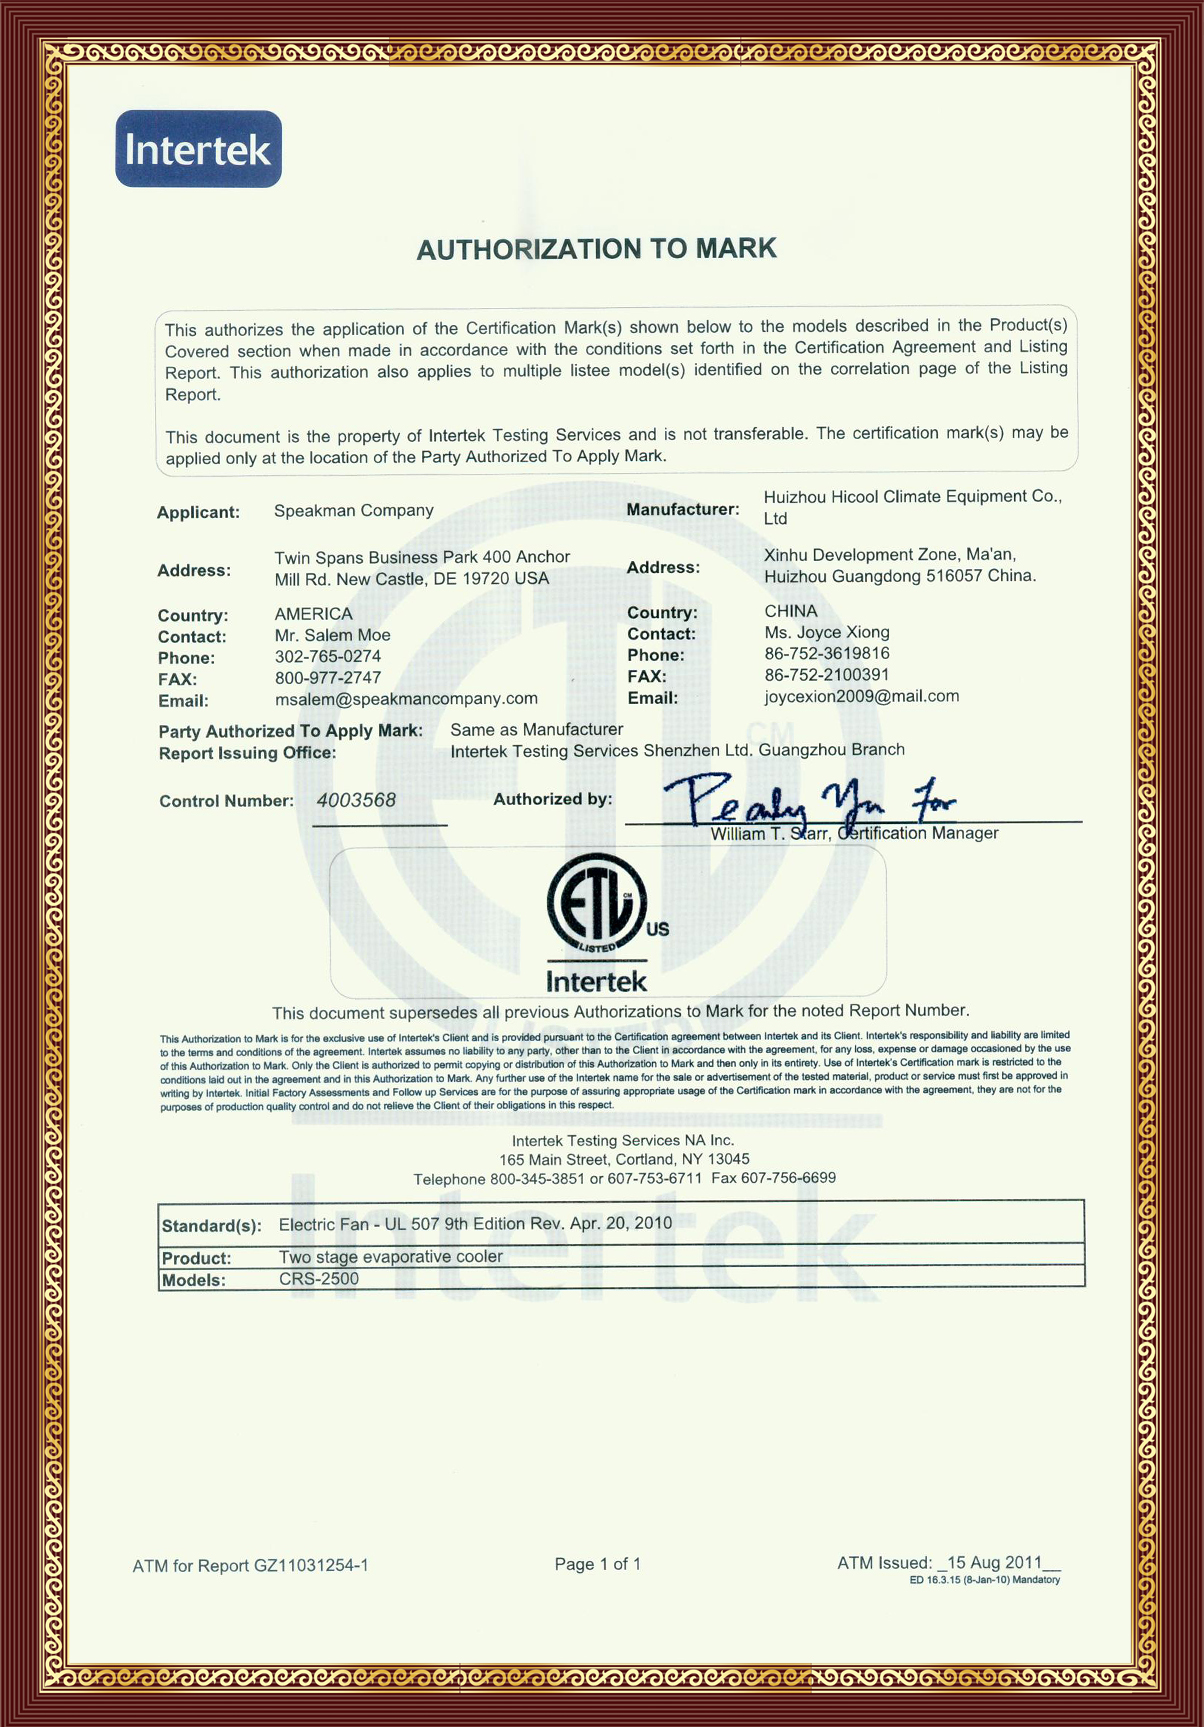 US ETL certification of Non-refrigerant air conditioning